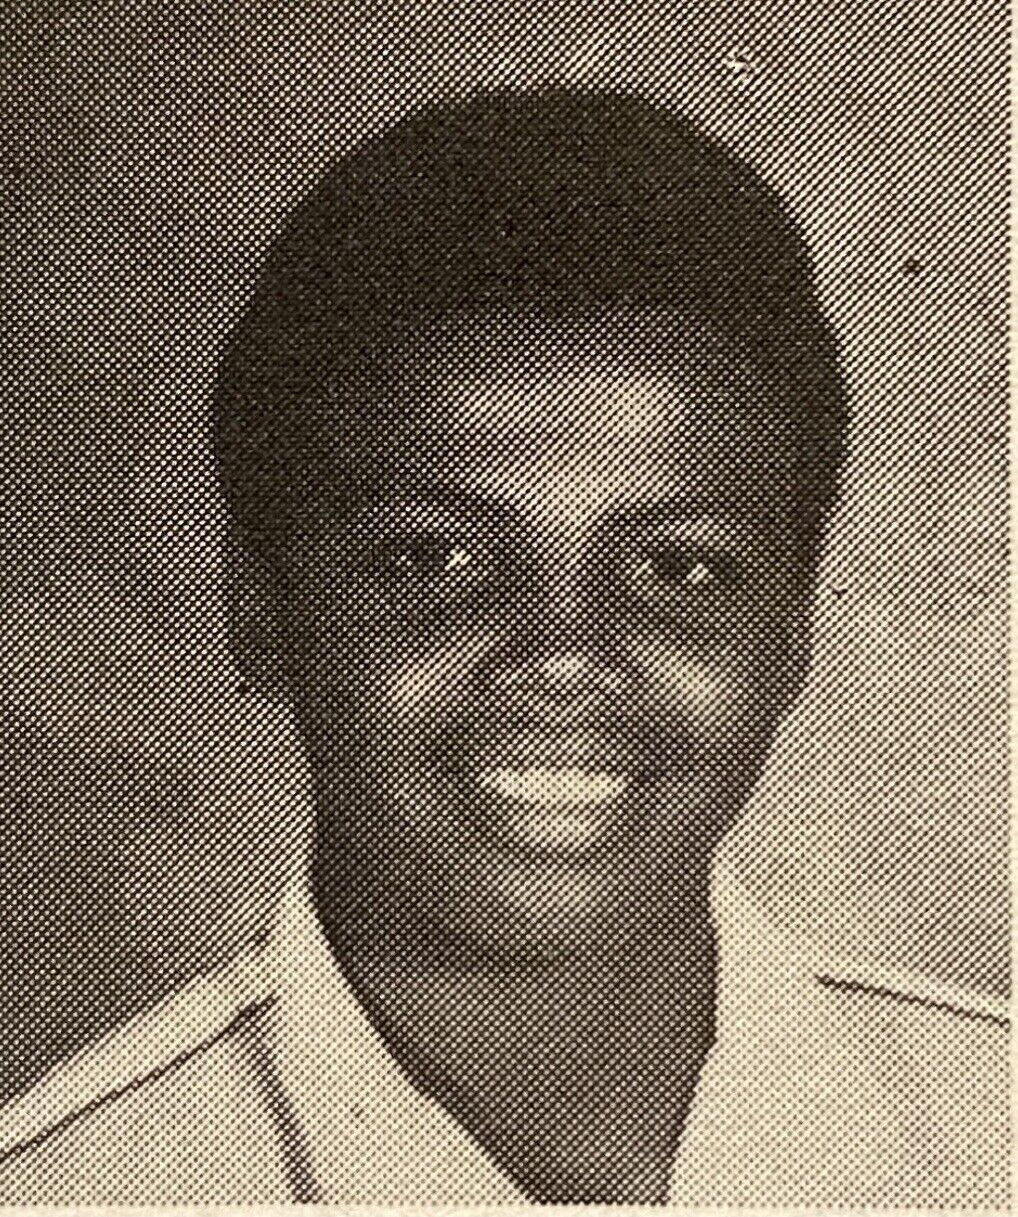 Charles Barkley NBA Legend High School Yearbook, Alabama High School Auburn Star